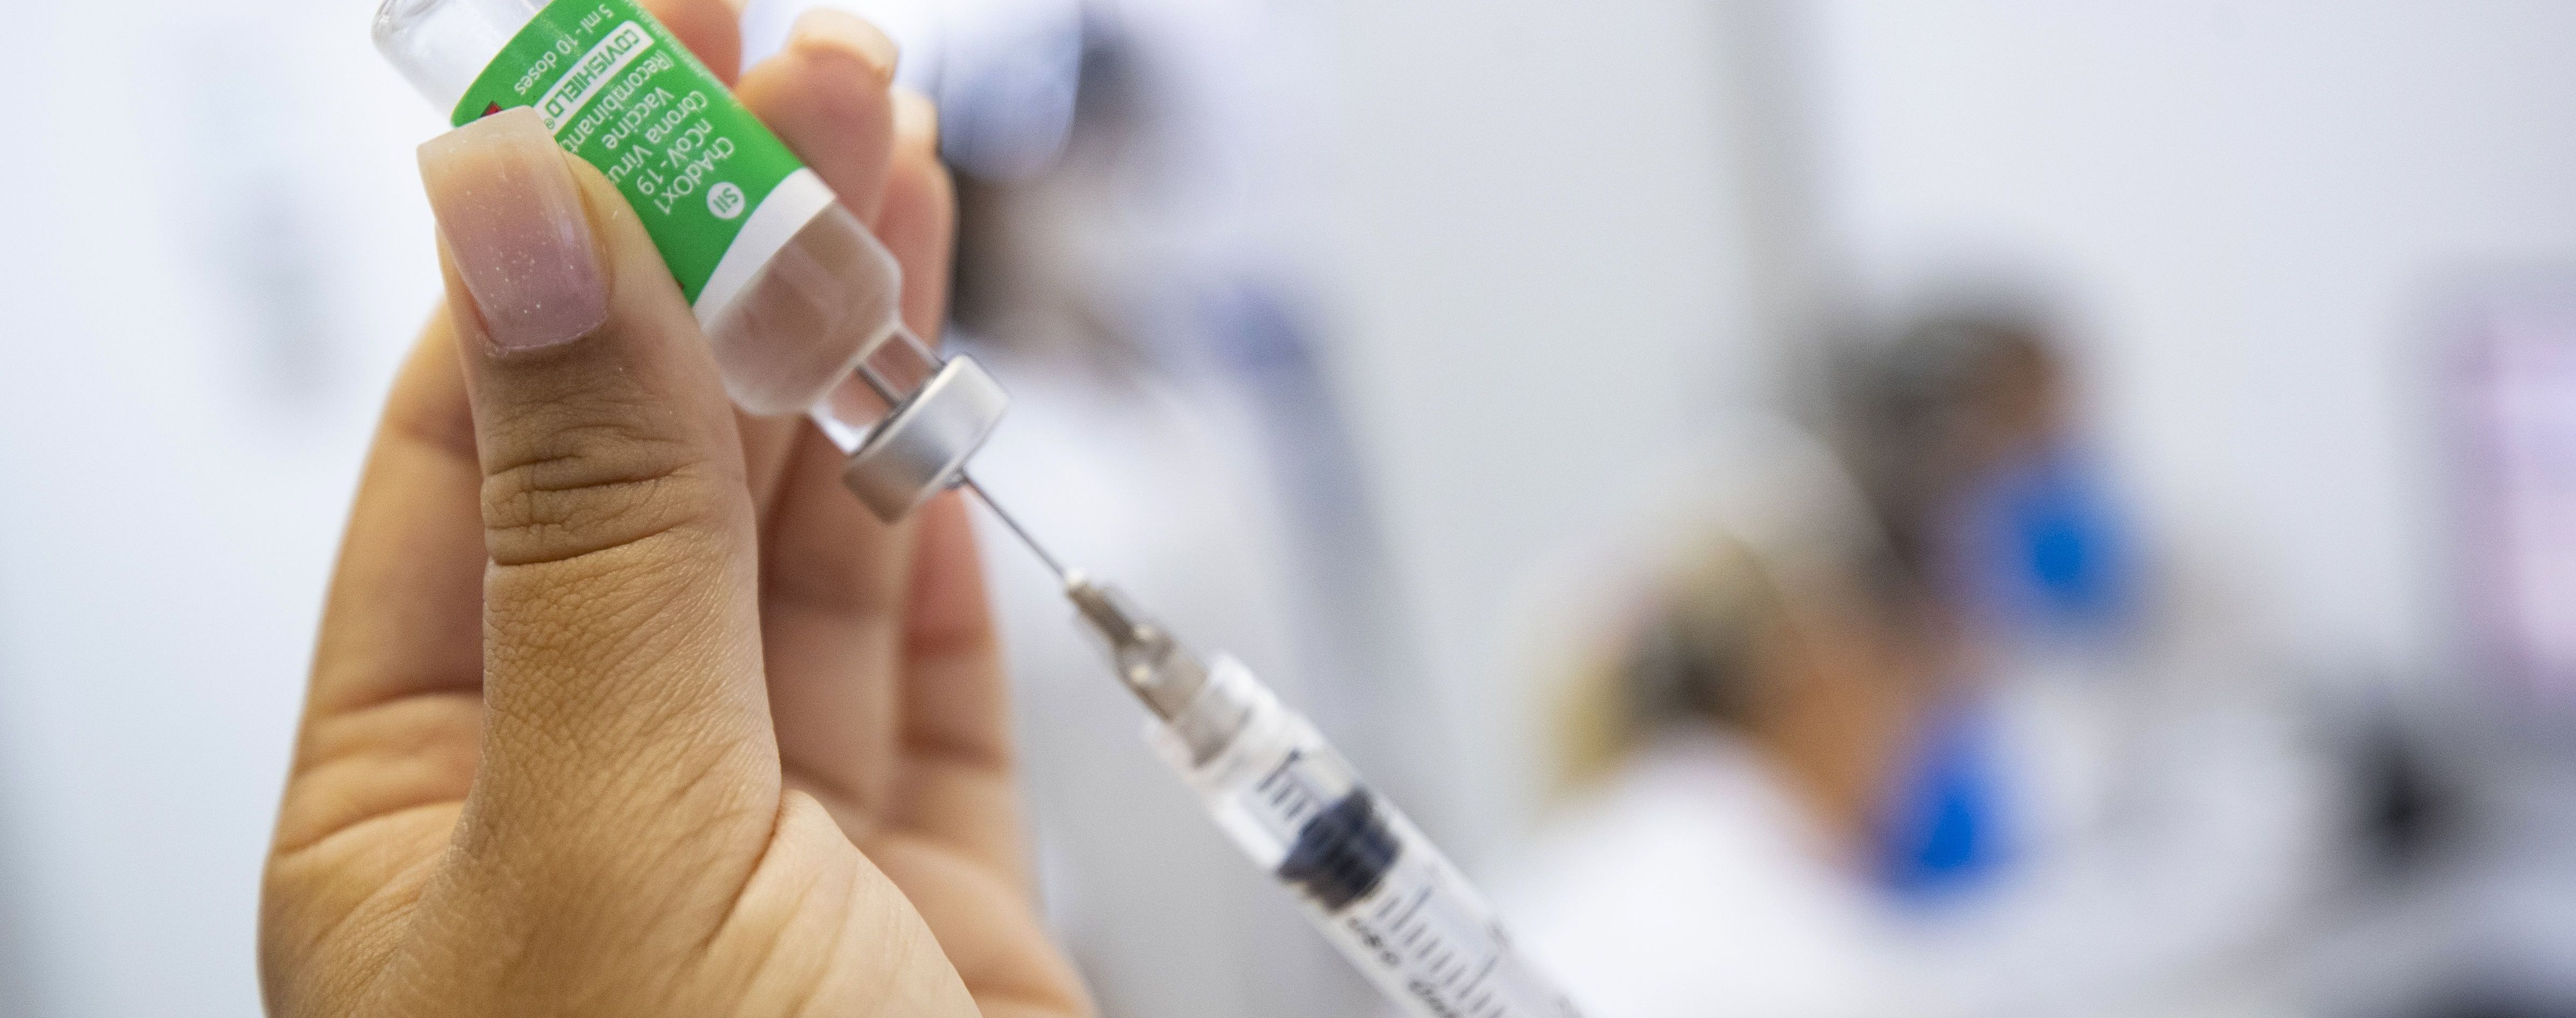 Вакцинация от коронавируса: Украина будет включена в первую волну инициативы COVAX — ВОЗ